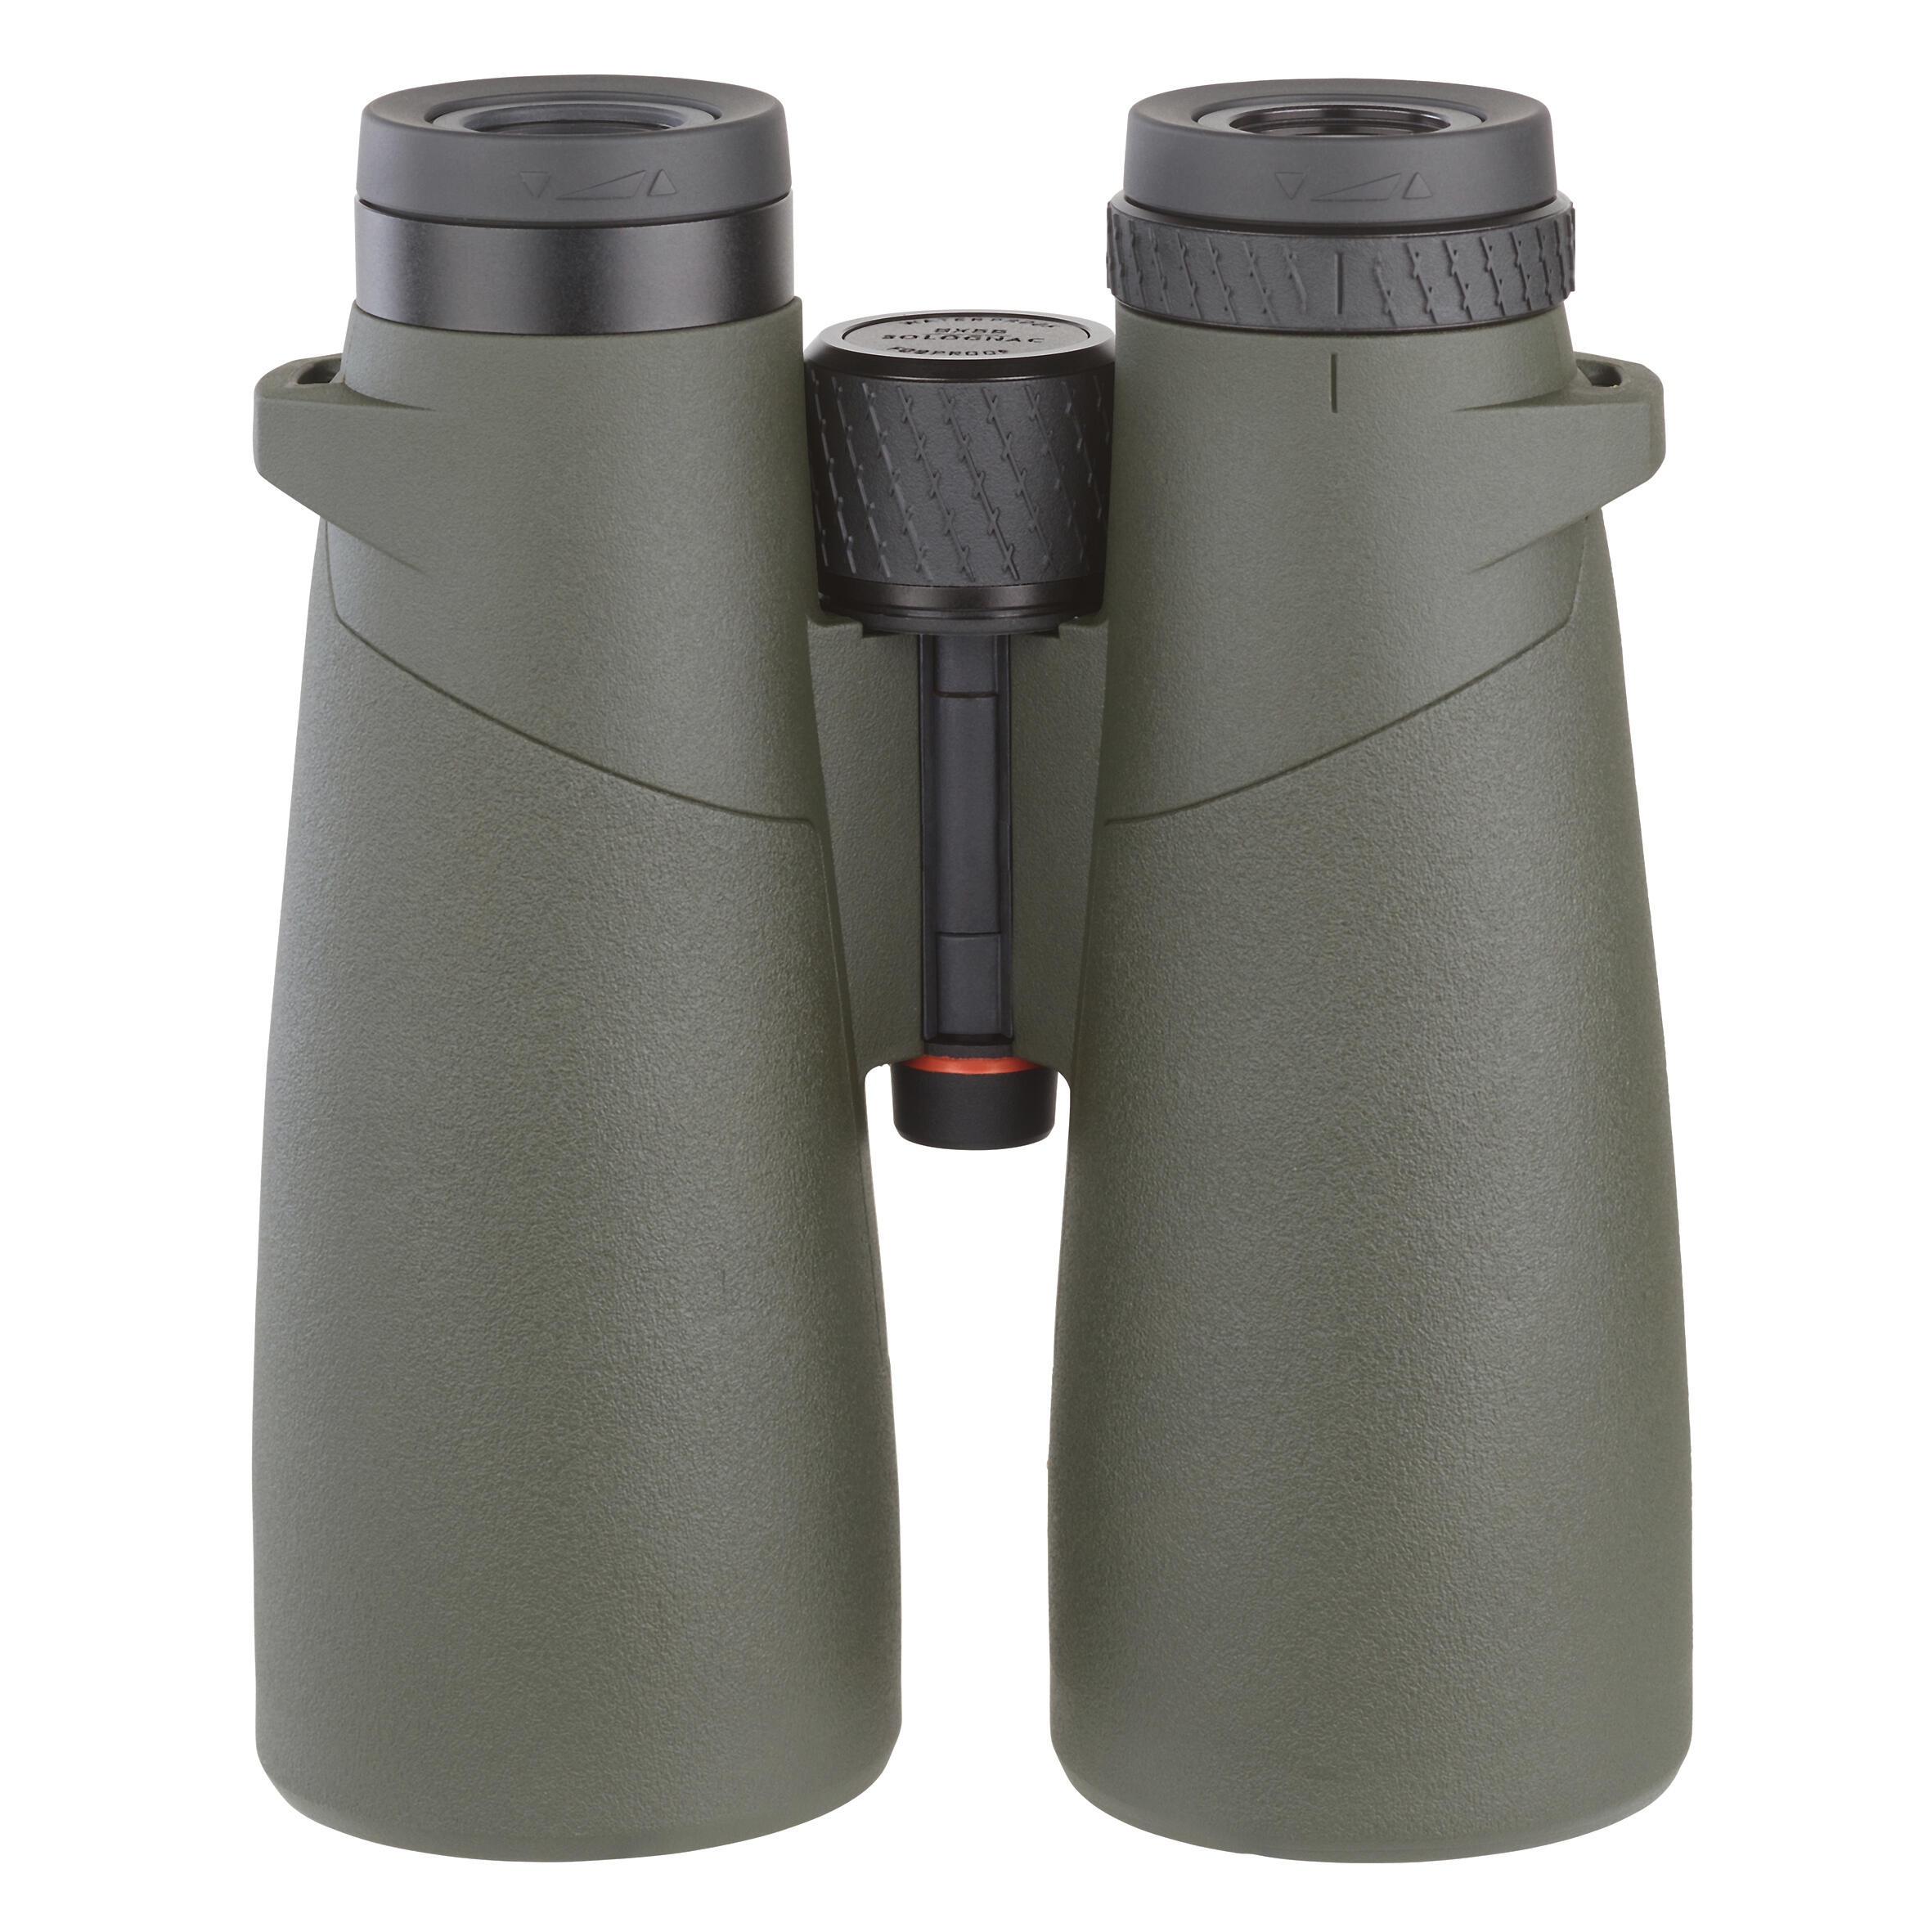 Waterproof hunting binoculars 900 8x56 - khaki 8/11